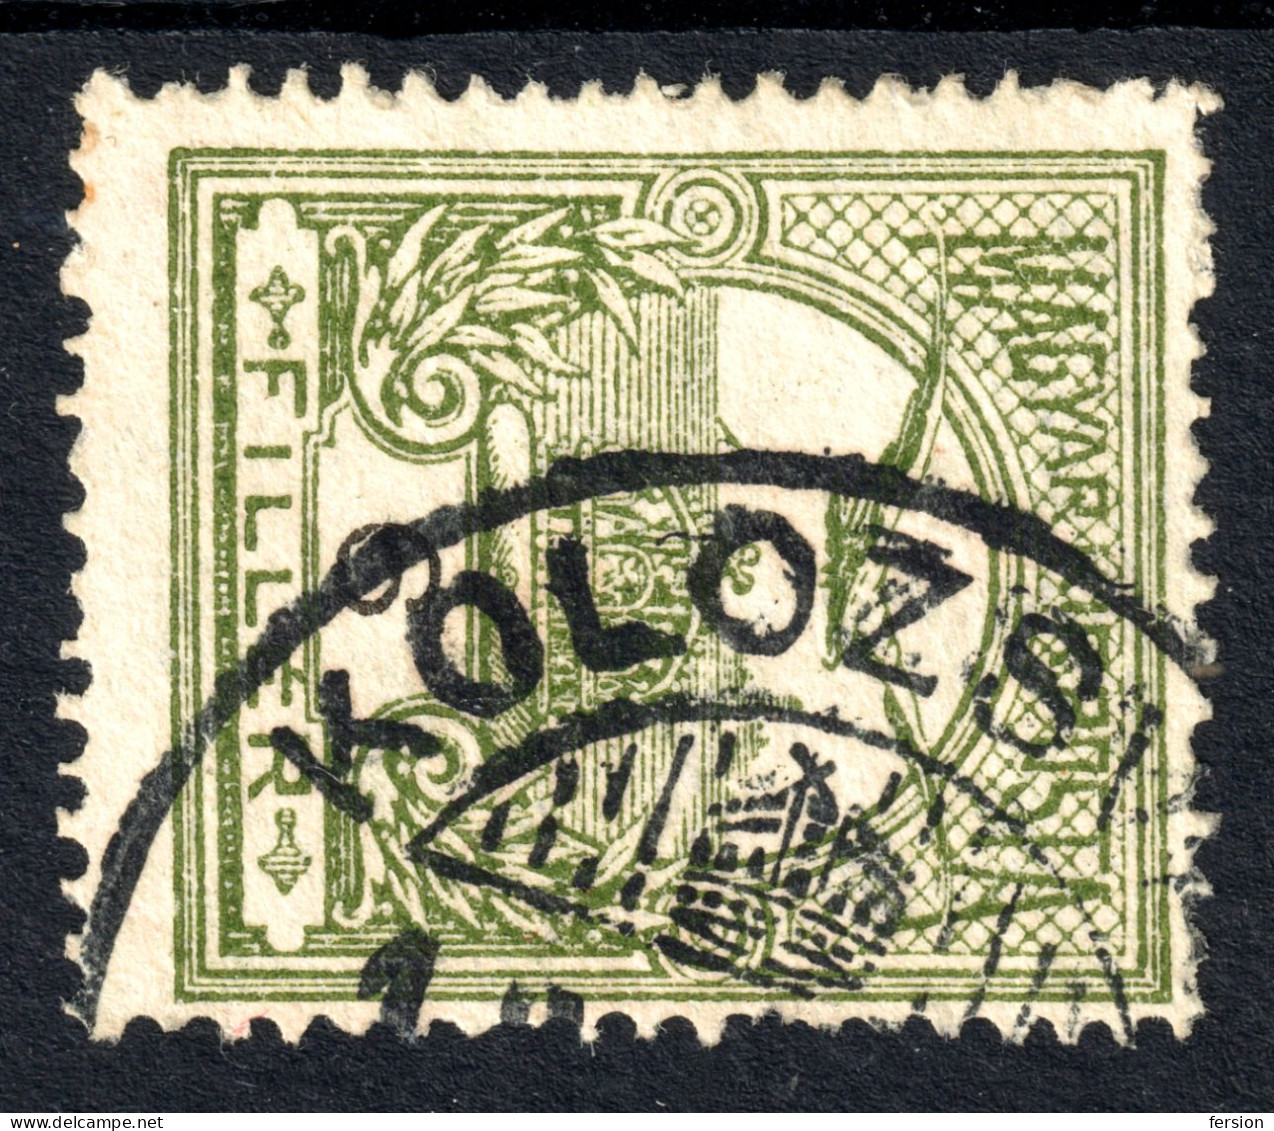 KOLOZSVÁR CLUJ-NAPOCA Postmark / TURUL Crown 1910's Hungary Romania Banat Transylvania KOLOZS County KuK K.u.K - 6 Fill - Transsylvanië